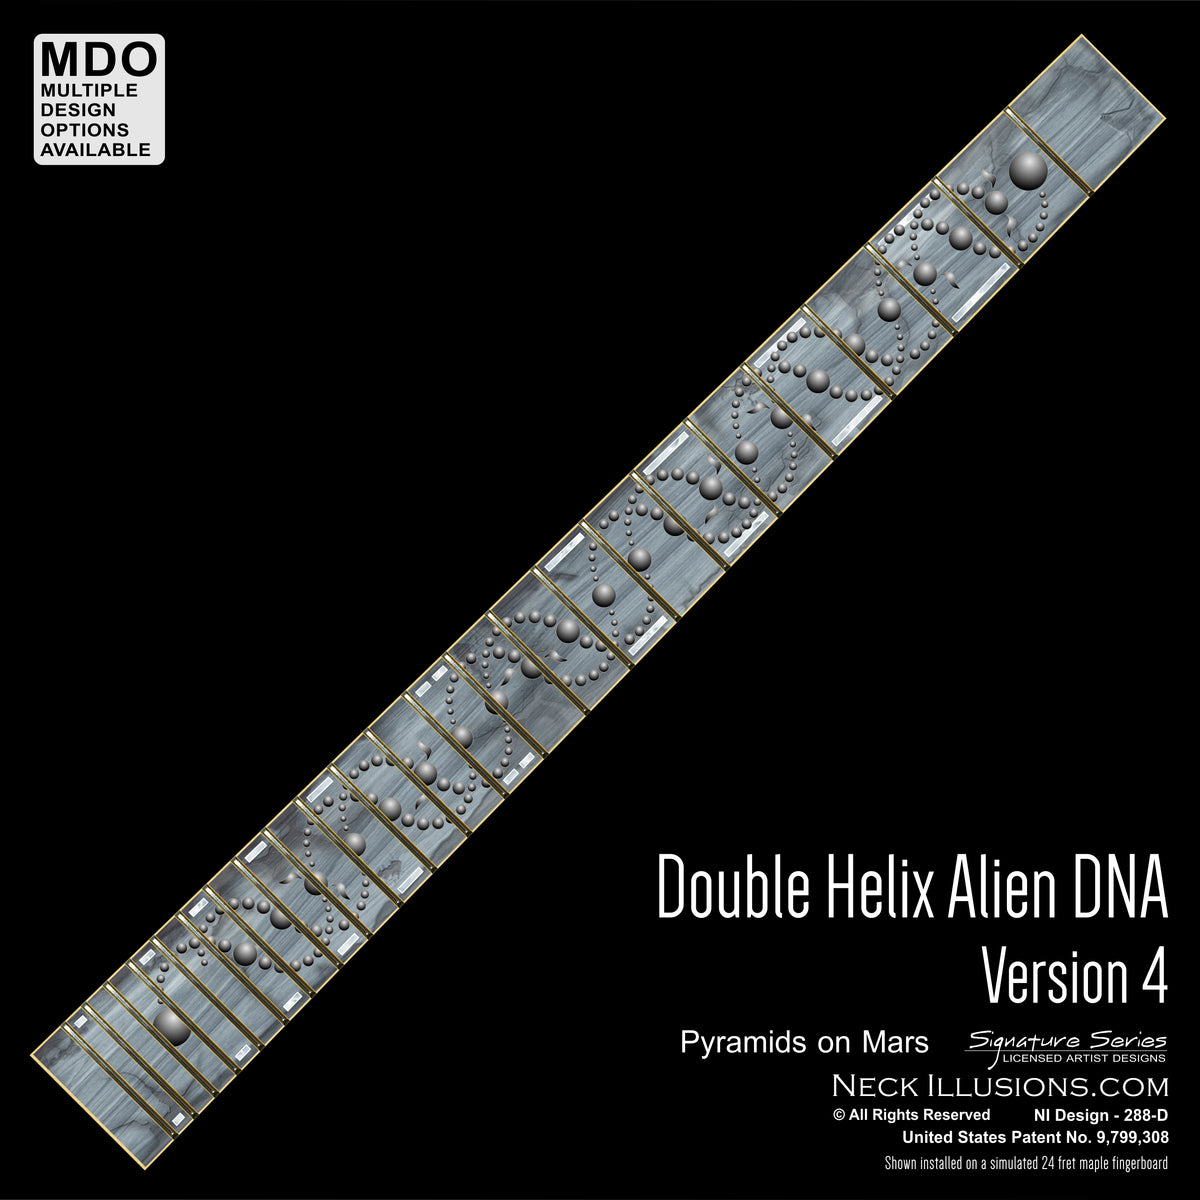 Pyramids on Mars - Double Helix Alien DNA